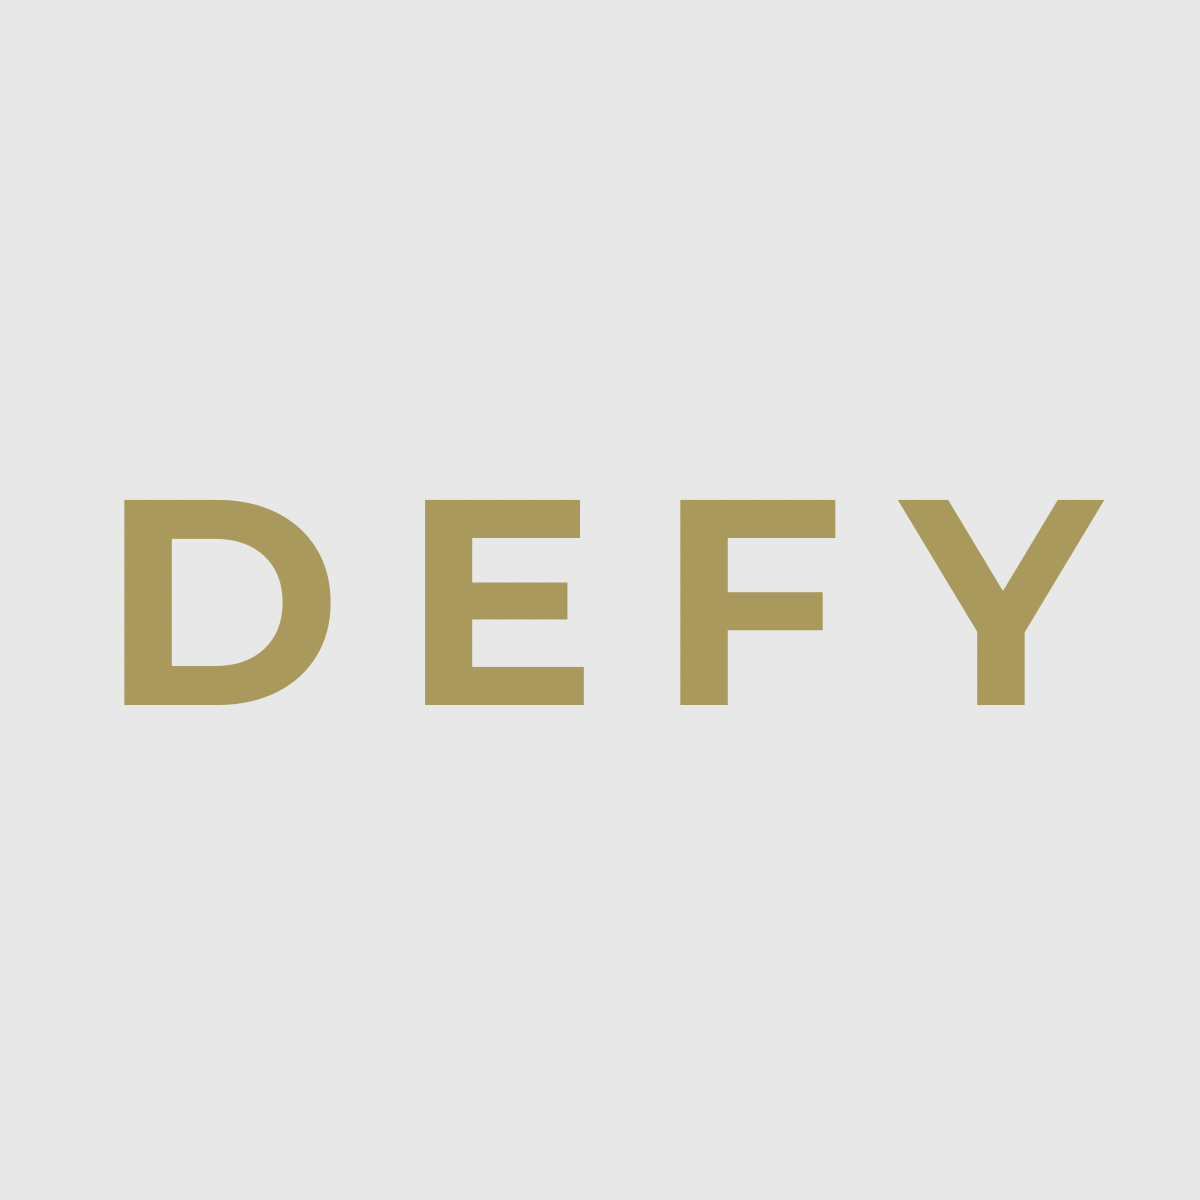 Defy Logo